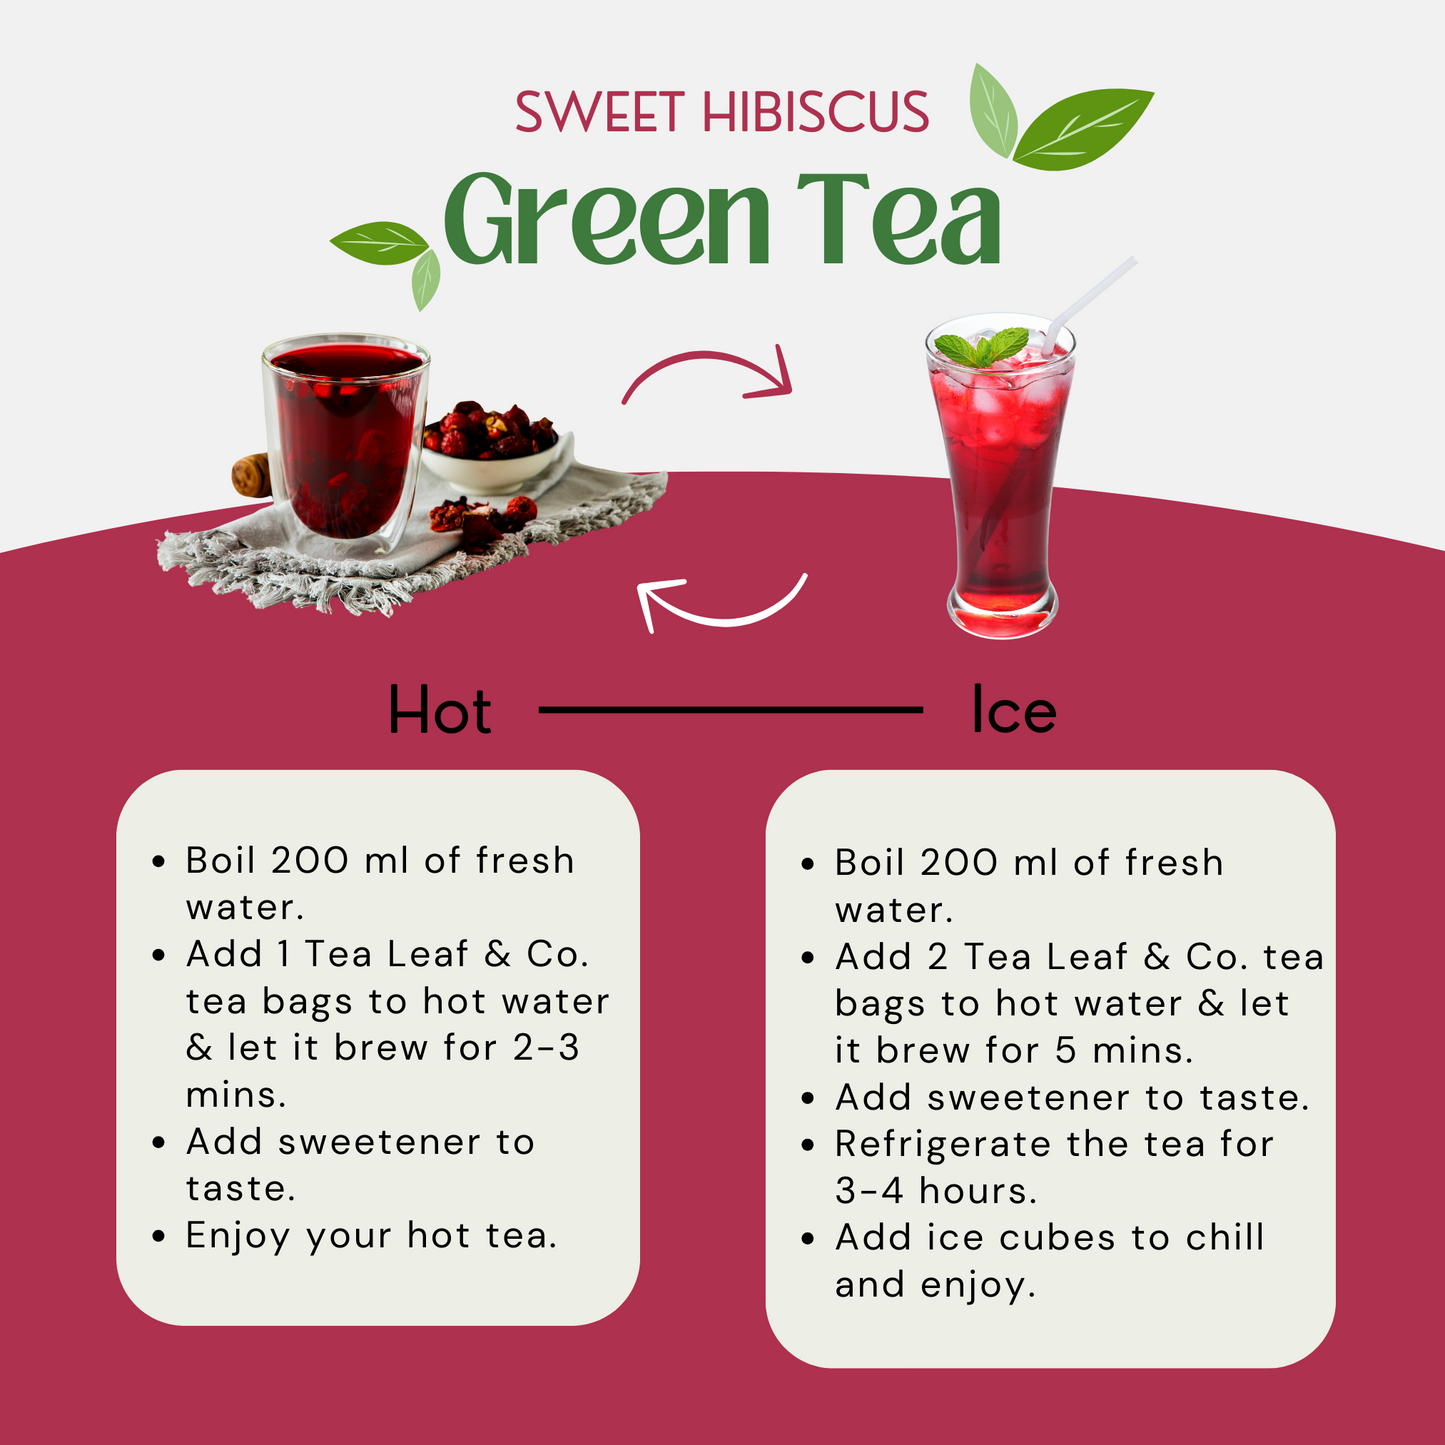 Sweet Hibiscus Green Tea (Pack of 2) - 50 Tea Bags